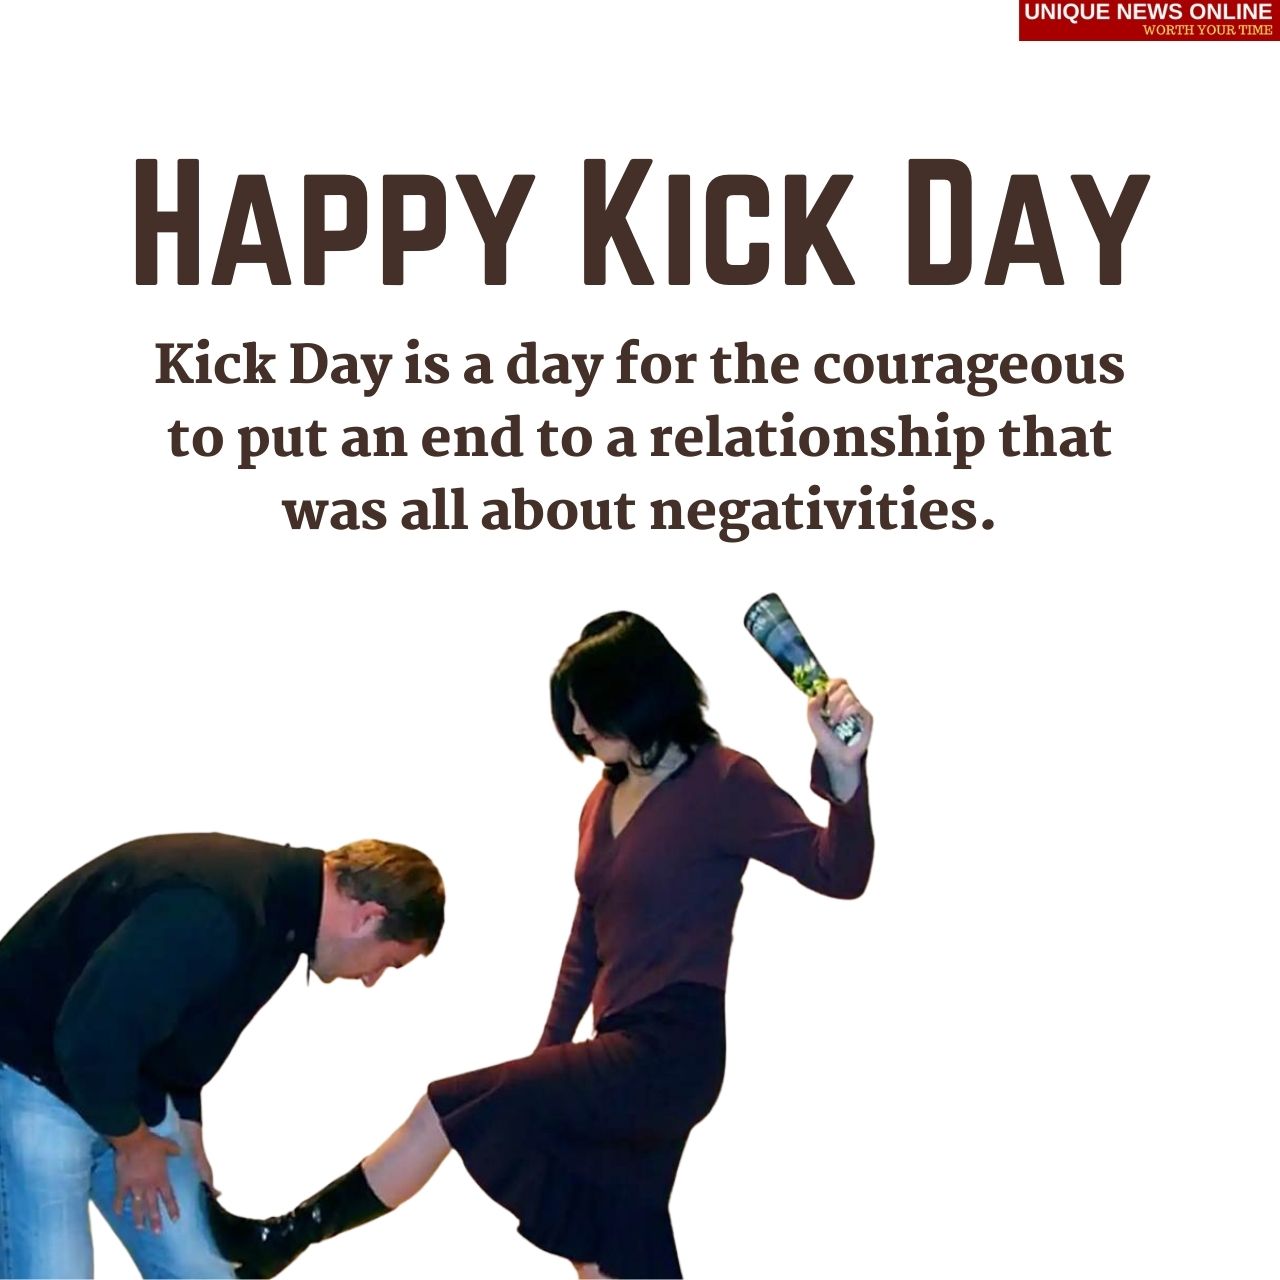 Happy Kick Day 2022 رغبات ، تحيات ، صور عالية الدقة ، رسائل ، اقتباسات ، ورق حائط ، فيديو حالة WhatsApp للتنزيل للاحتفال باليوم الثاني من أسبوع مكافحة عيد الحب